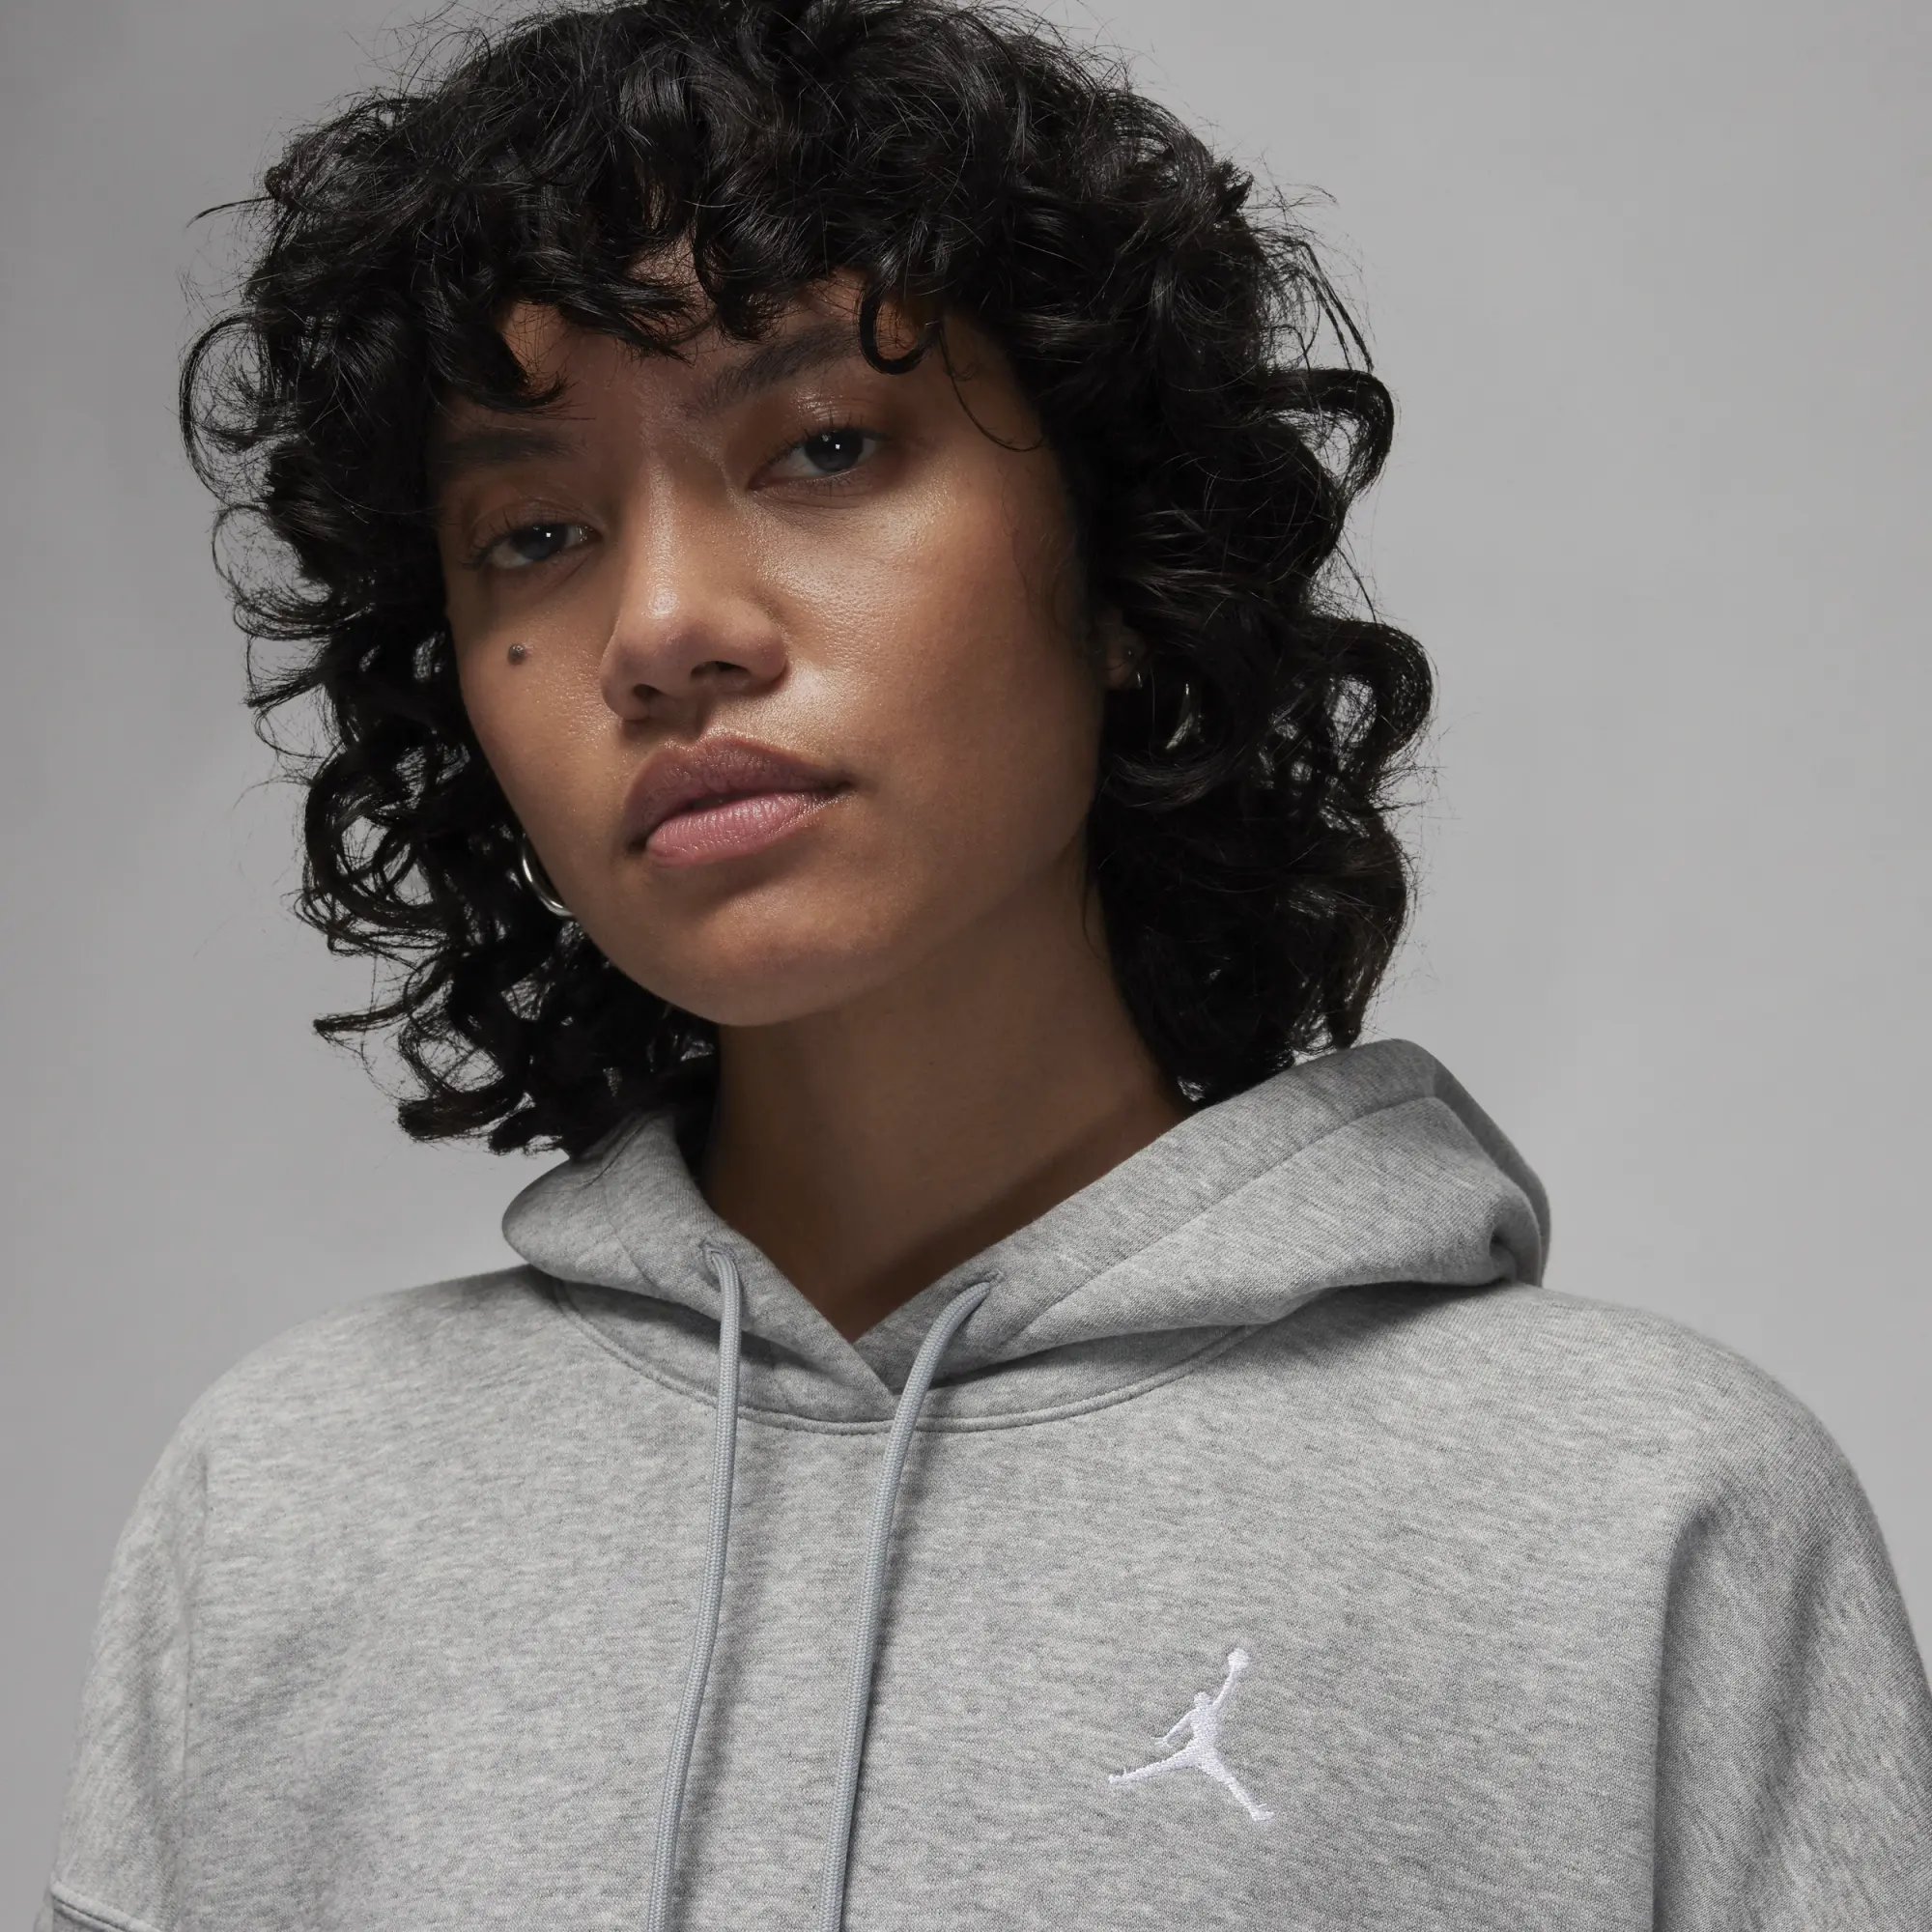 Nike Jordan Brooklyn Fleece Women's Hoodie - Grey | FN4488-063 | FOOTY.COM